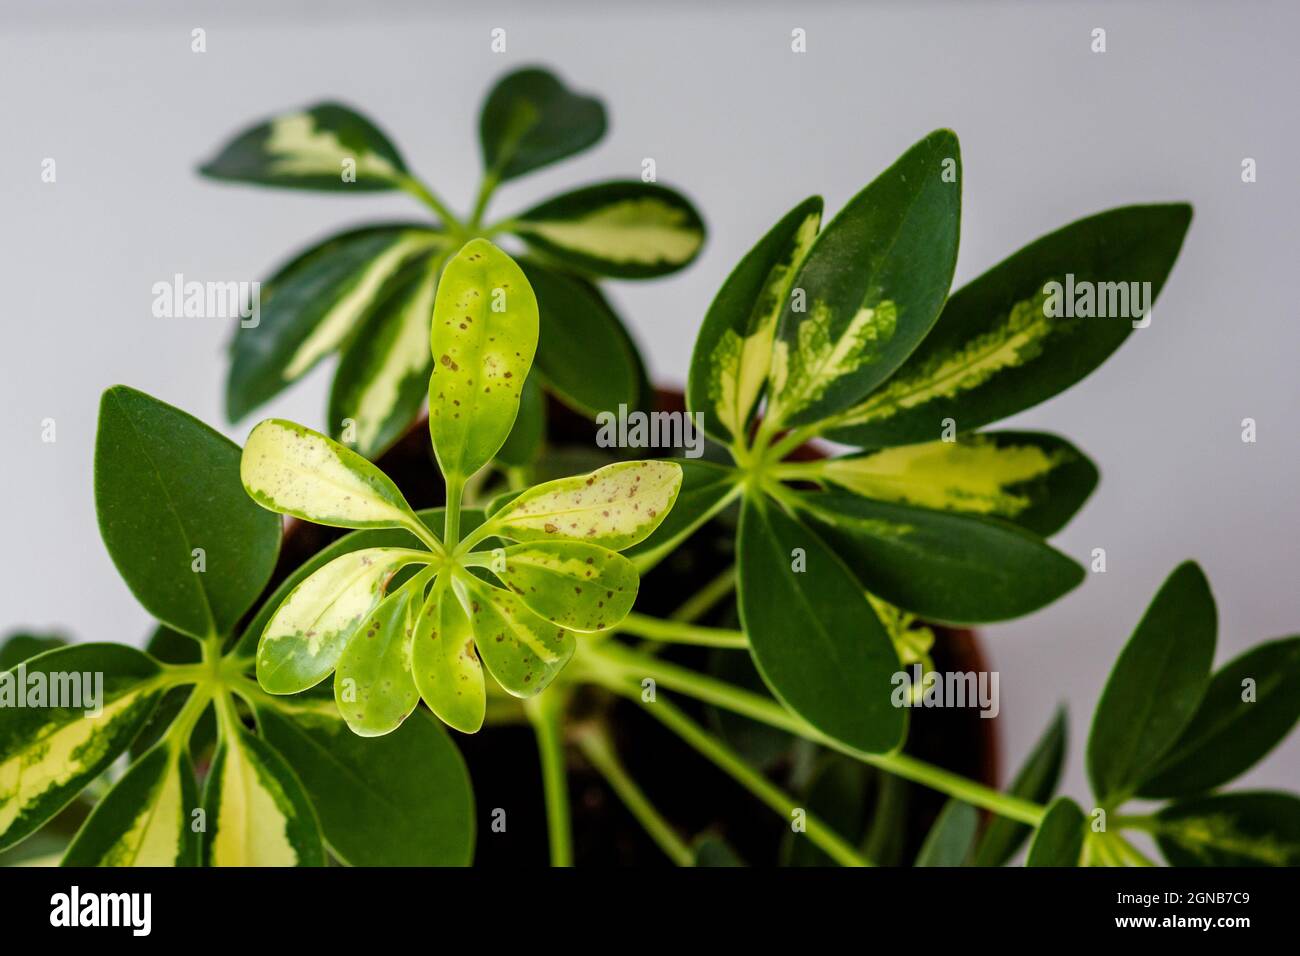 Dark spots on leaves of schefflera plant on white background Stock Photo